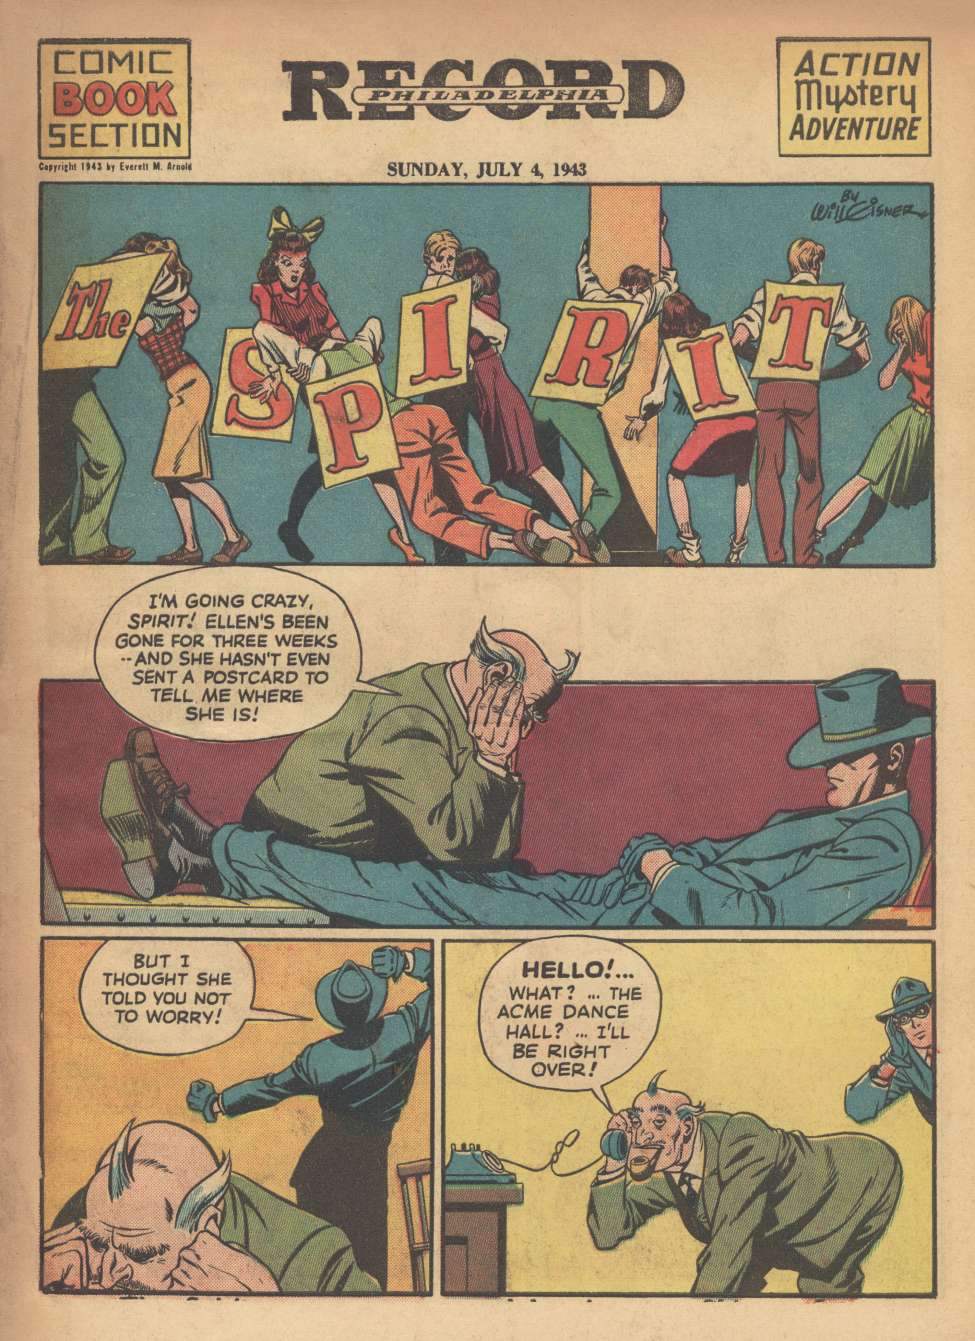 Comic Book Cover For The Spirit (1943-07-04) - Philadelphia Record